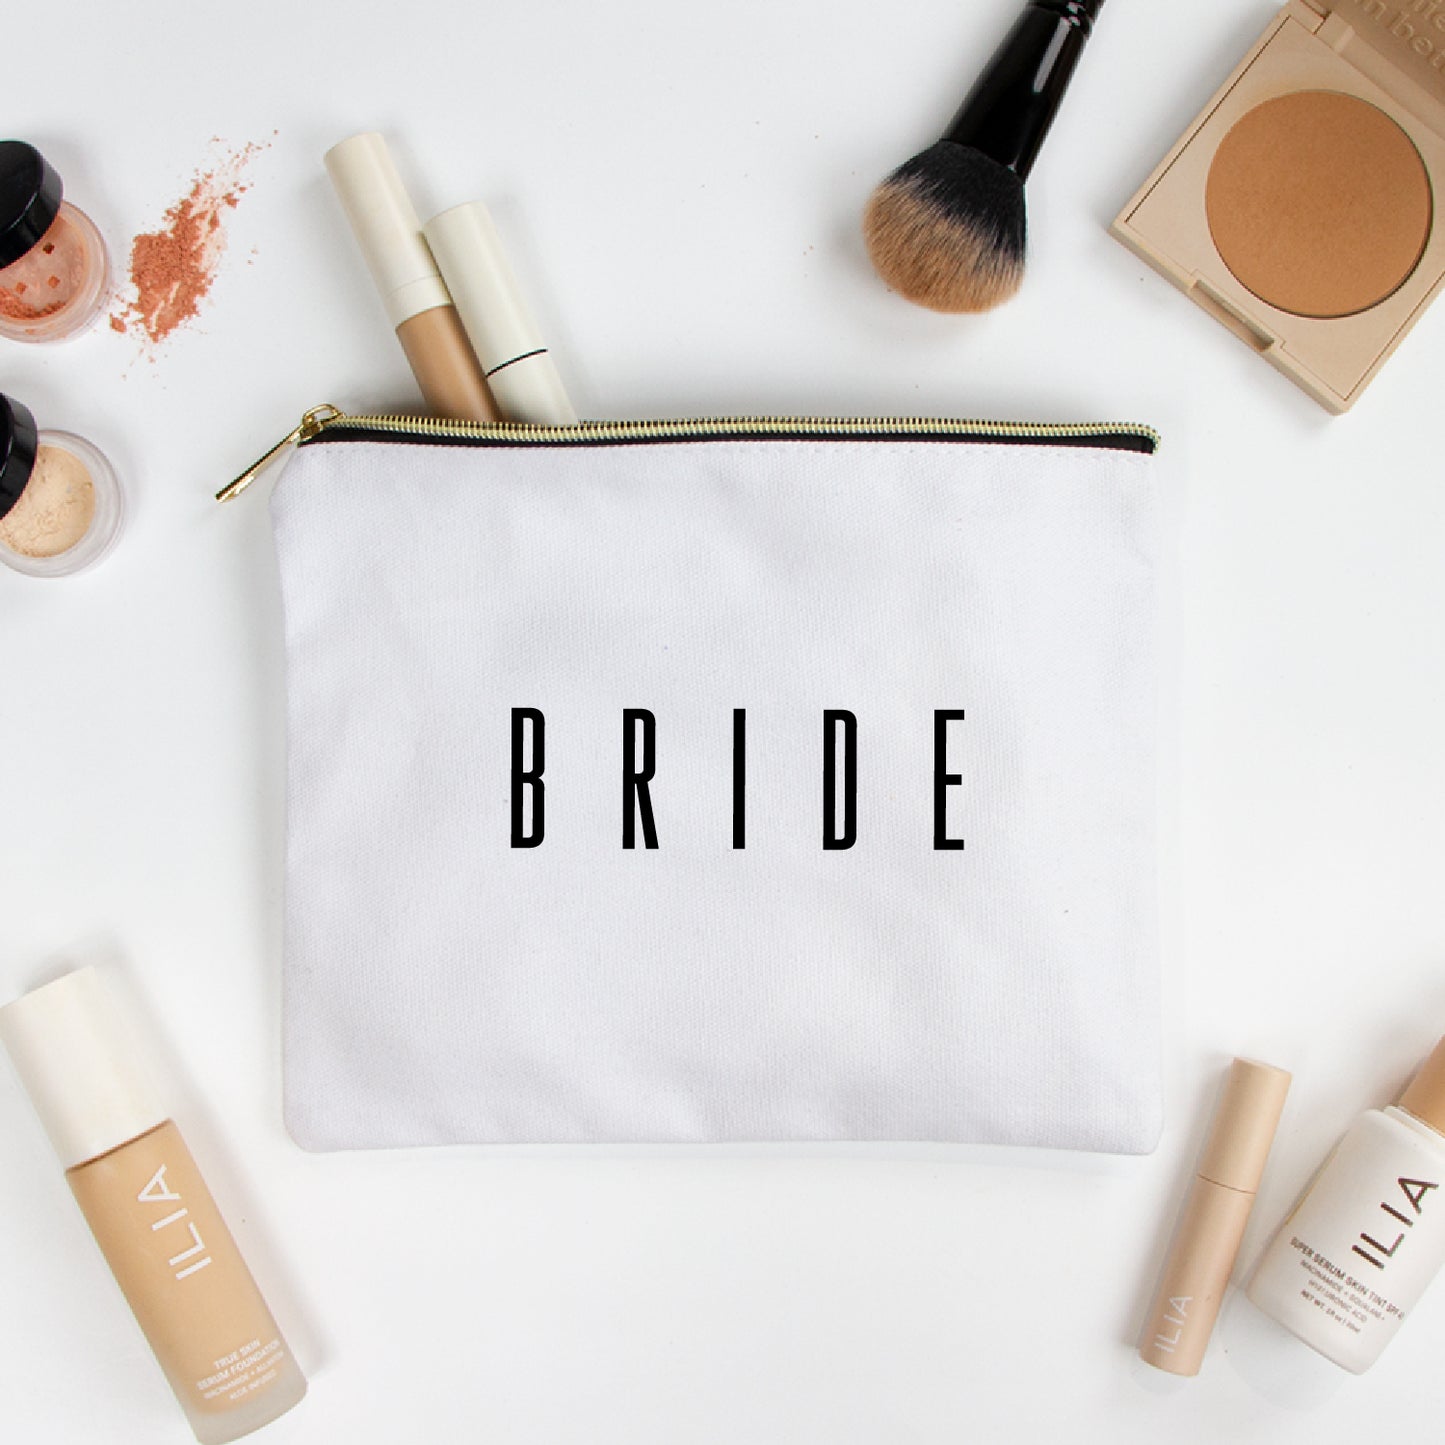 Bride Makeup Bag Gifts